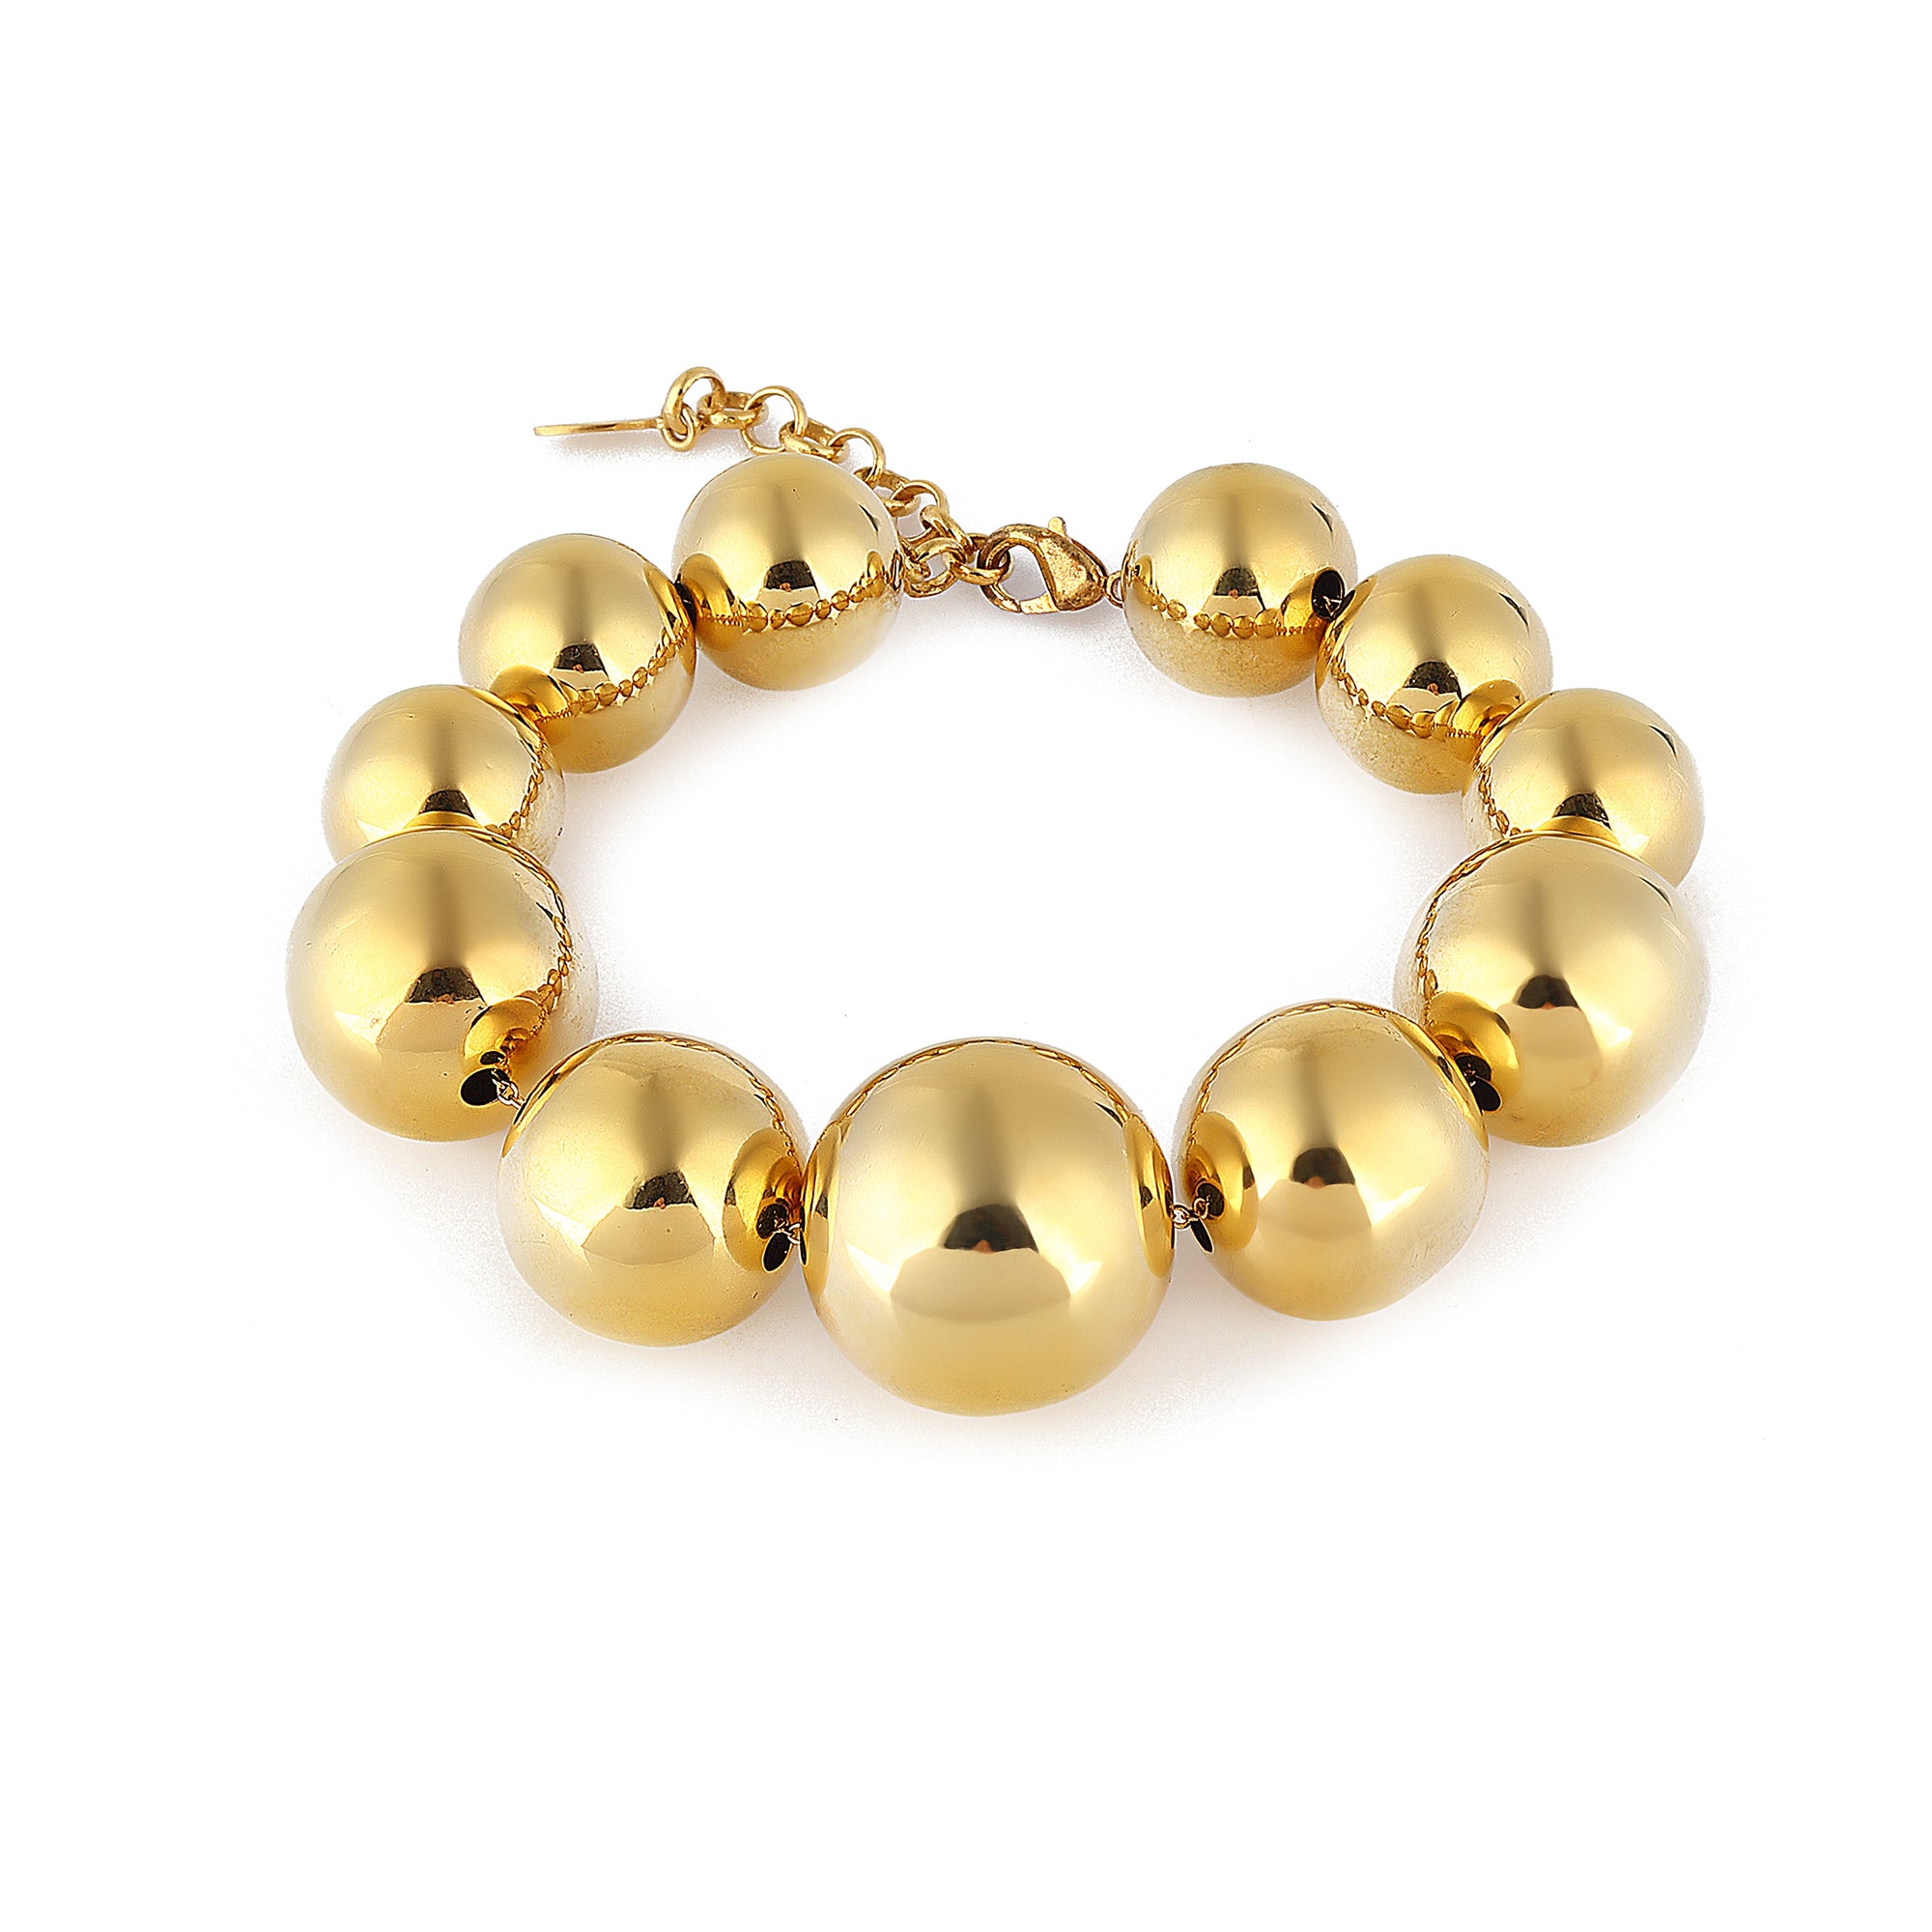 24K Gold plated bracelet costume jewelry